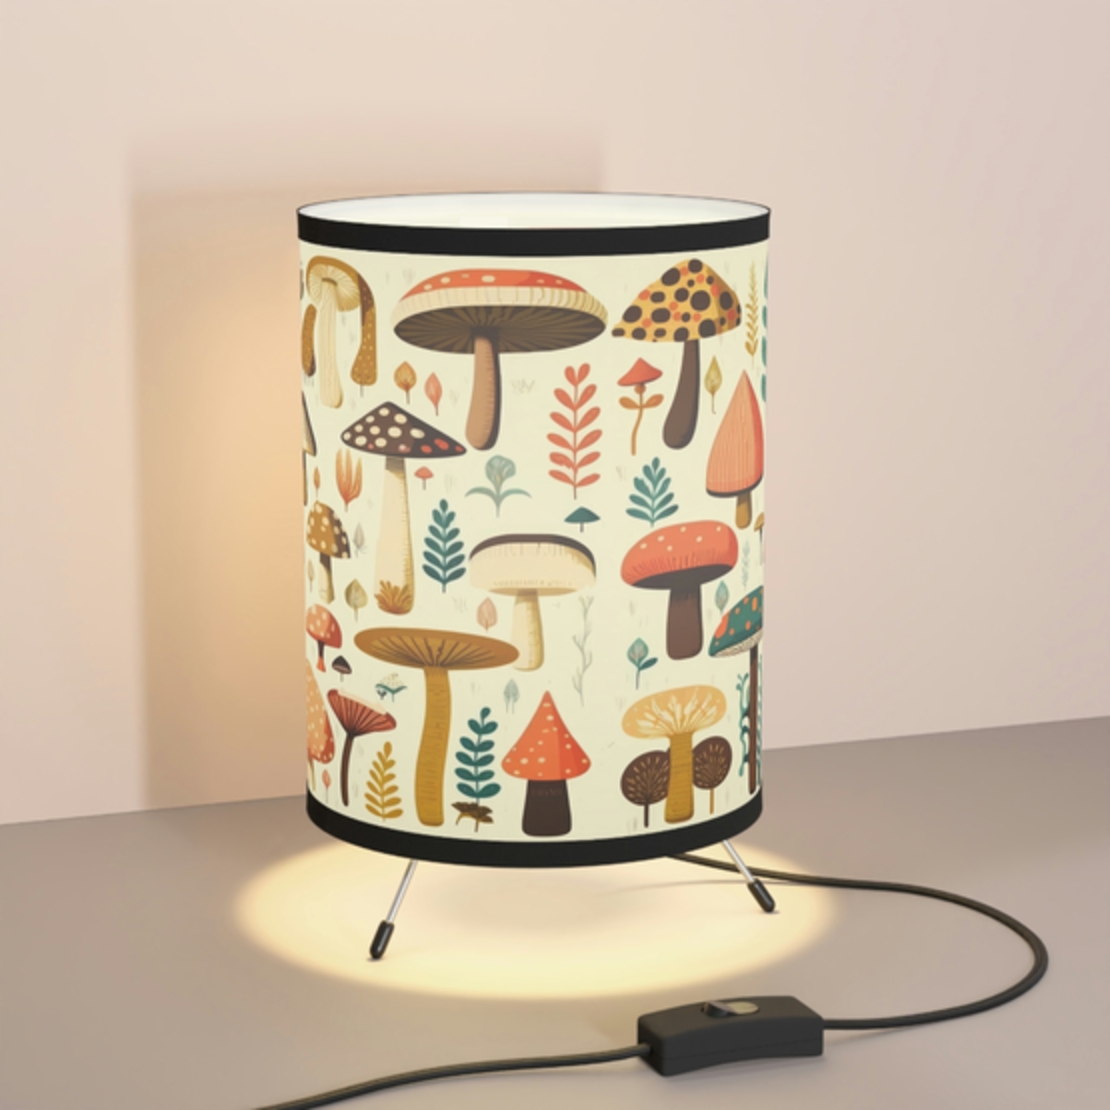 Mushroom Cozy Home Set - Lumbar Pillow, Table Lamp, Plush Blanket - Unique Decor Gift - FungiFly